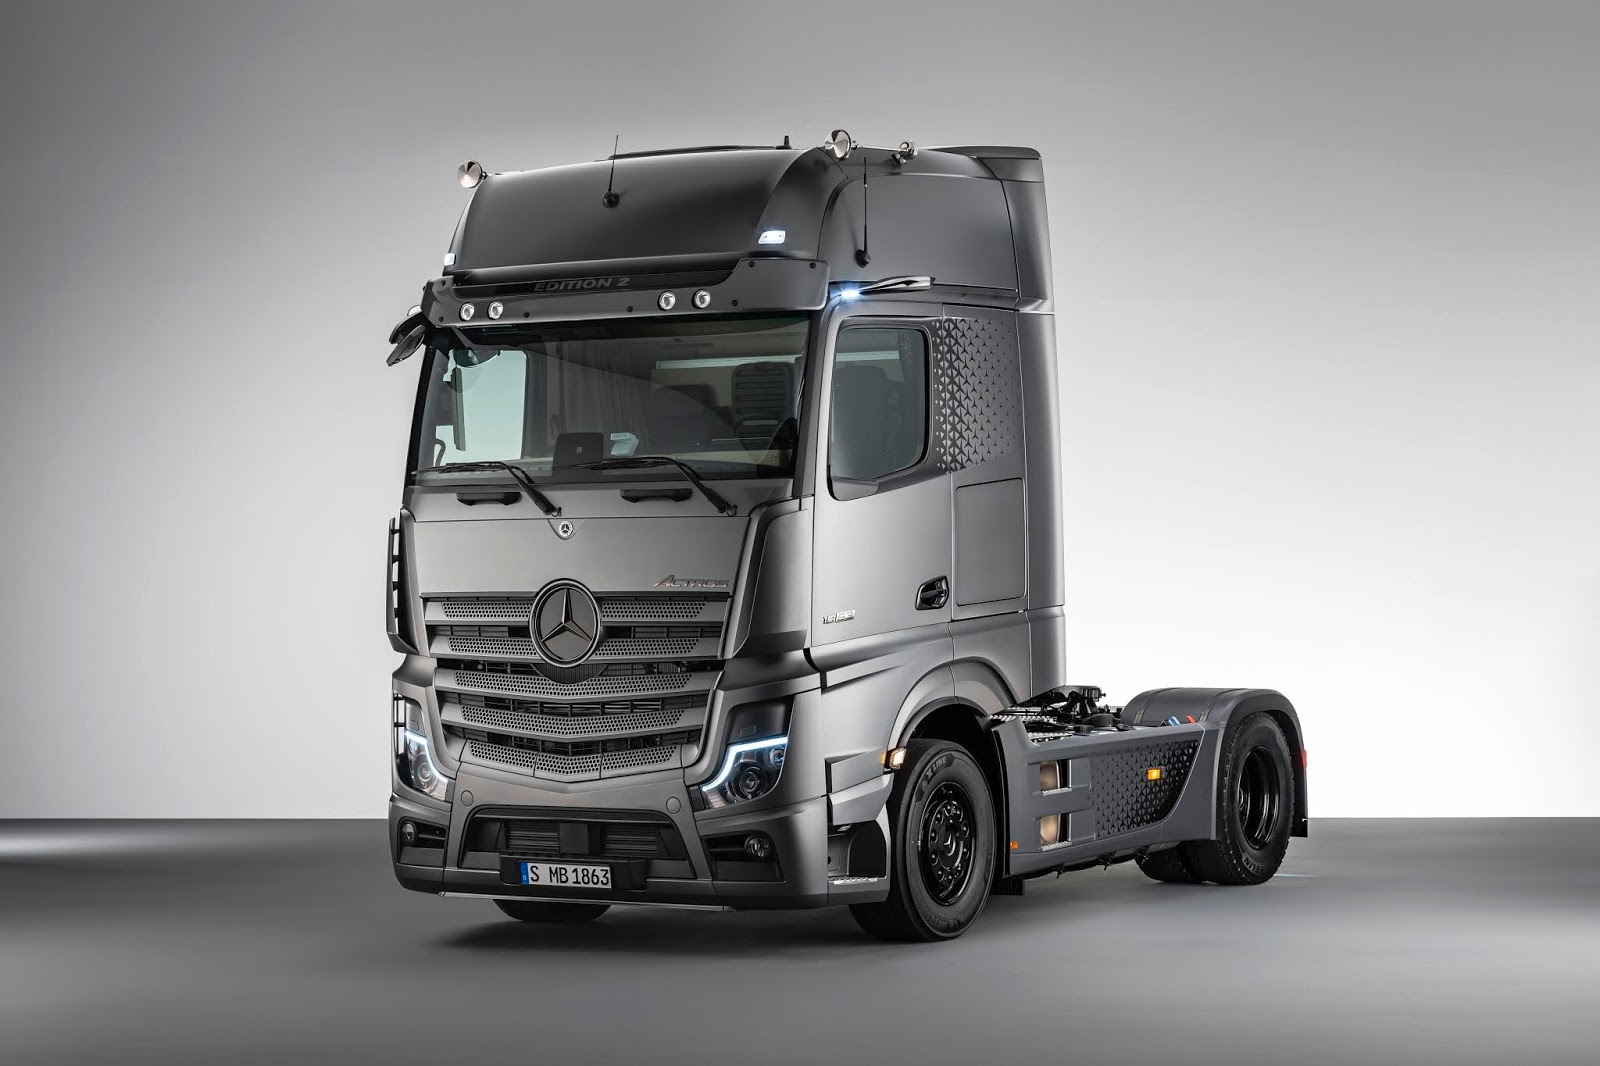 20C0493 005 Mercedes Trucks : Νέα έκδοση Actros, το νέο Arocs & 2 νέα συστήματα ασφαλείας